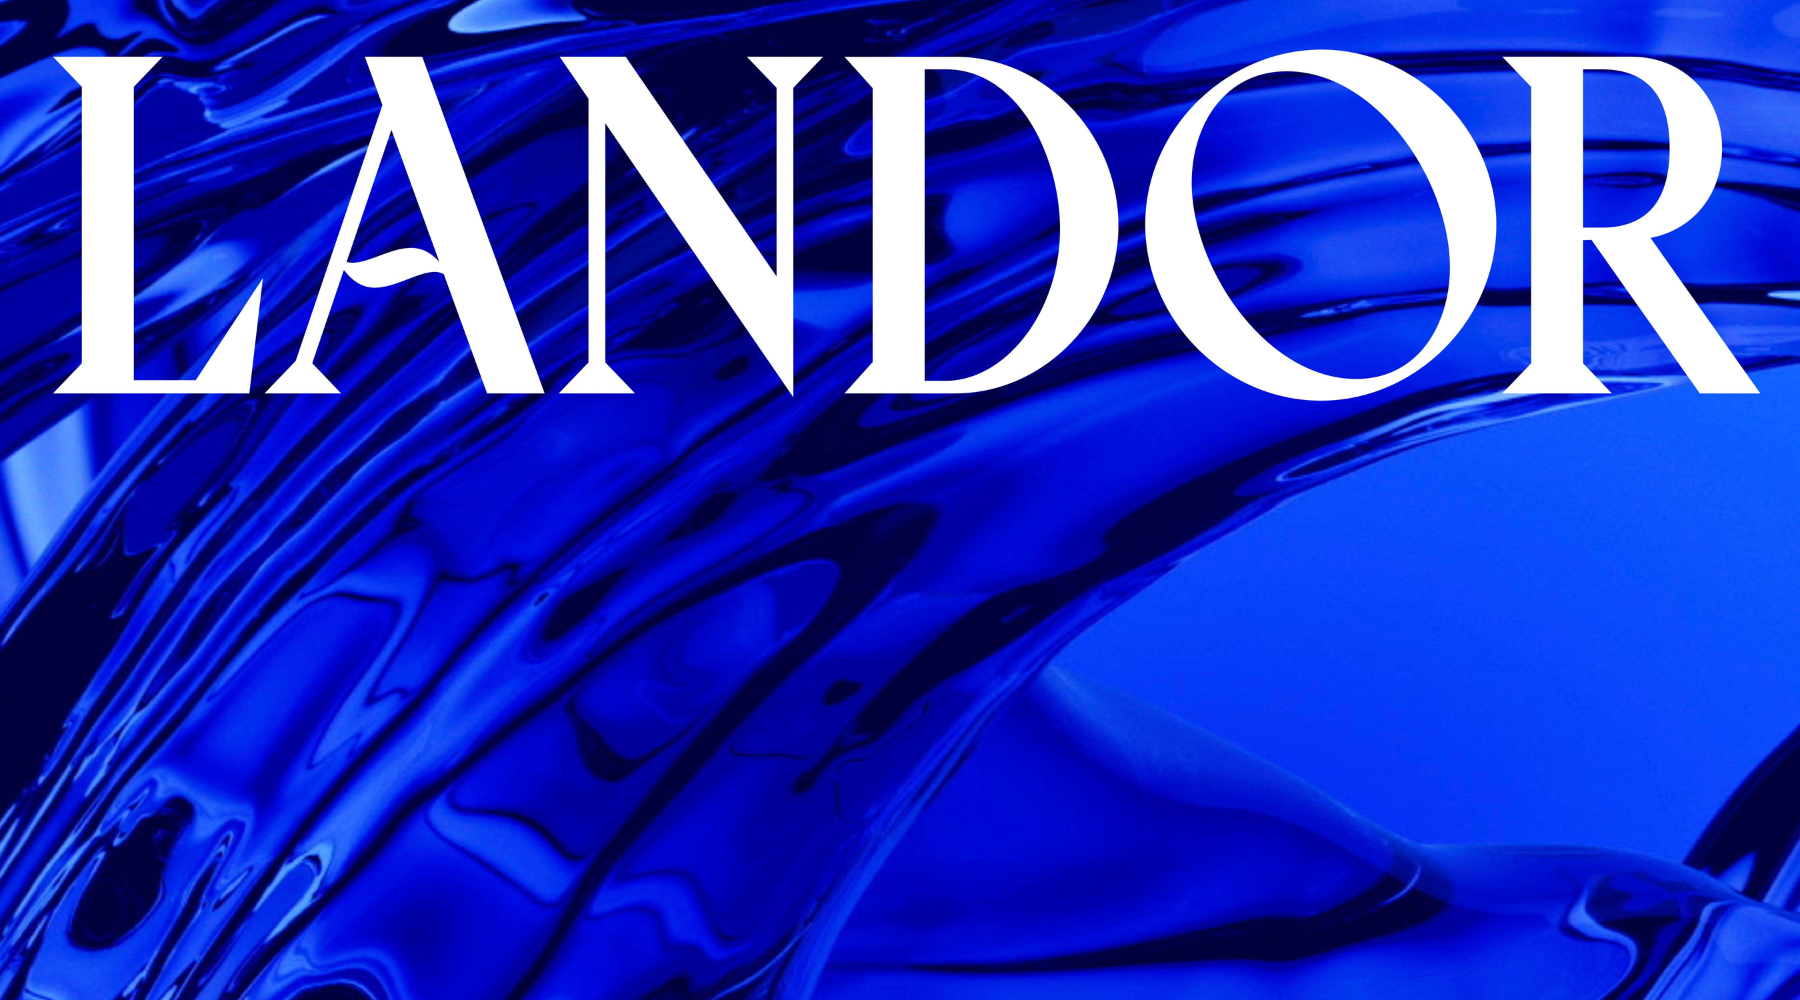 Landor & Fitch rebrands as 'Landor'